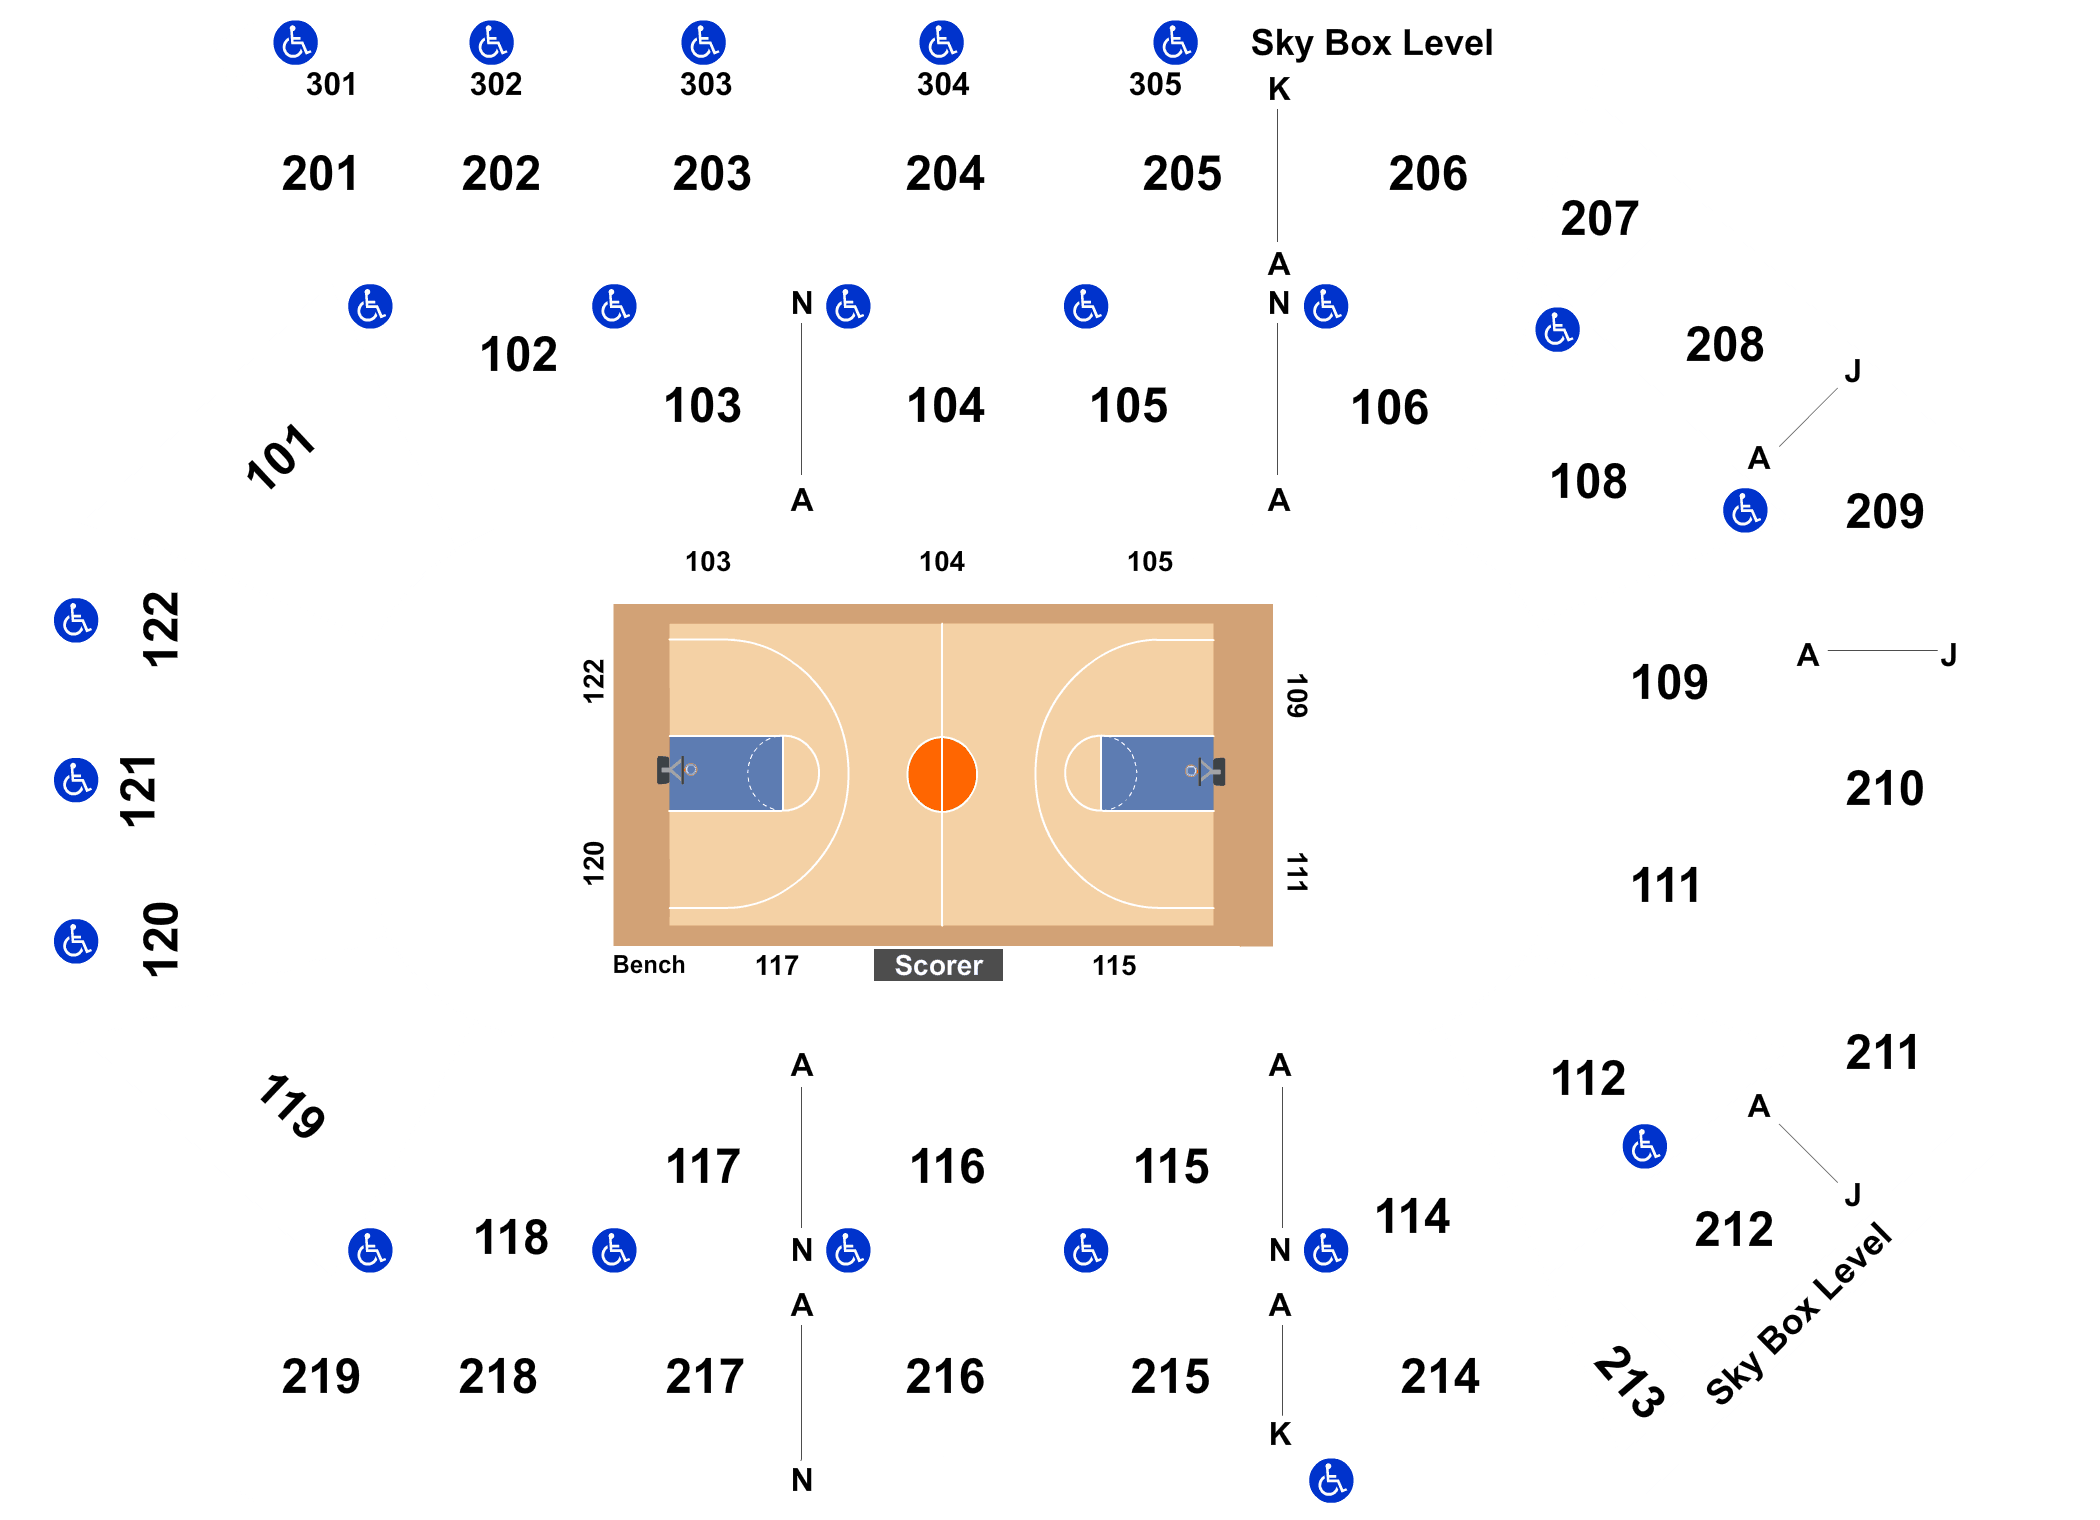 Arena Floor  Toyota Arena